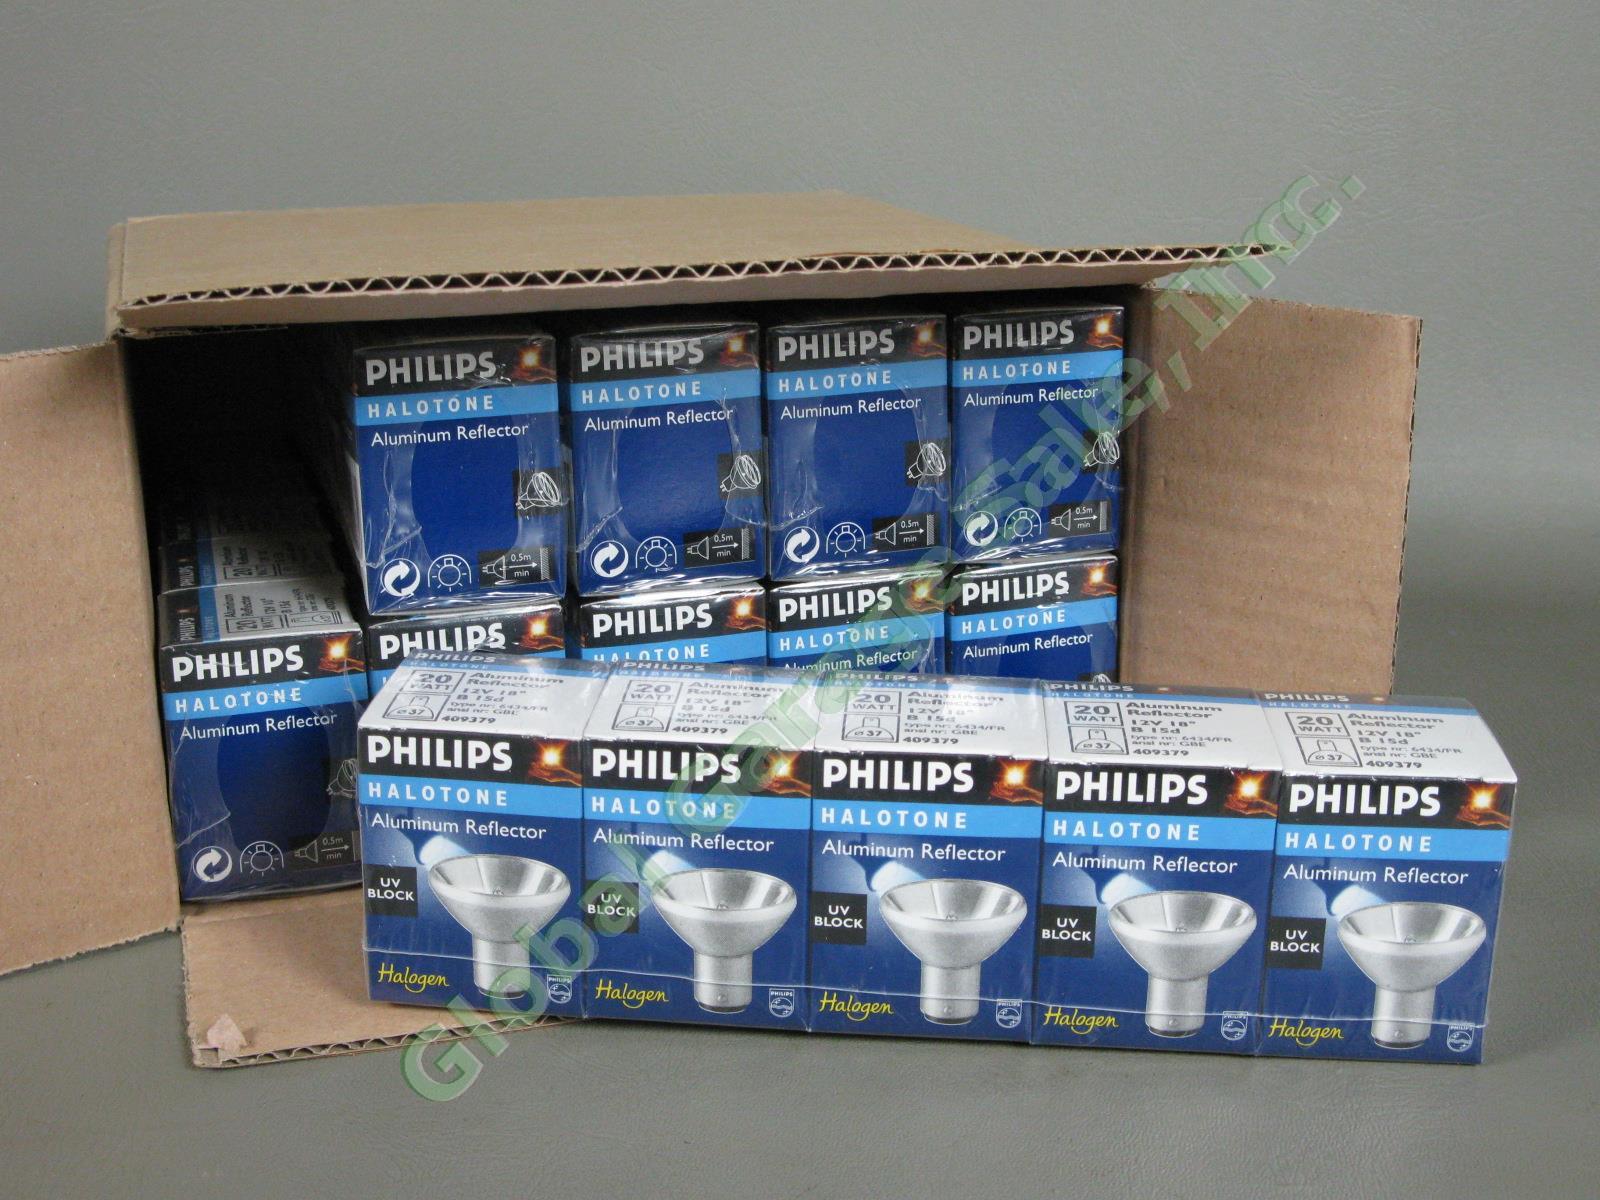 334 NEW Philips Halotone Light Bulb Lot 20w 12v